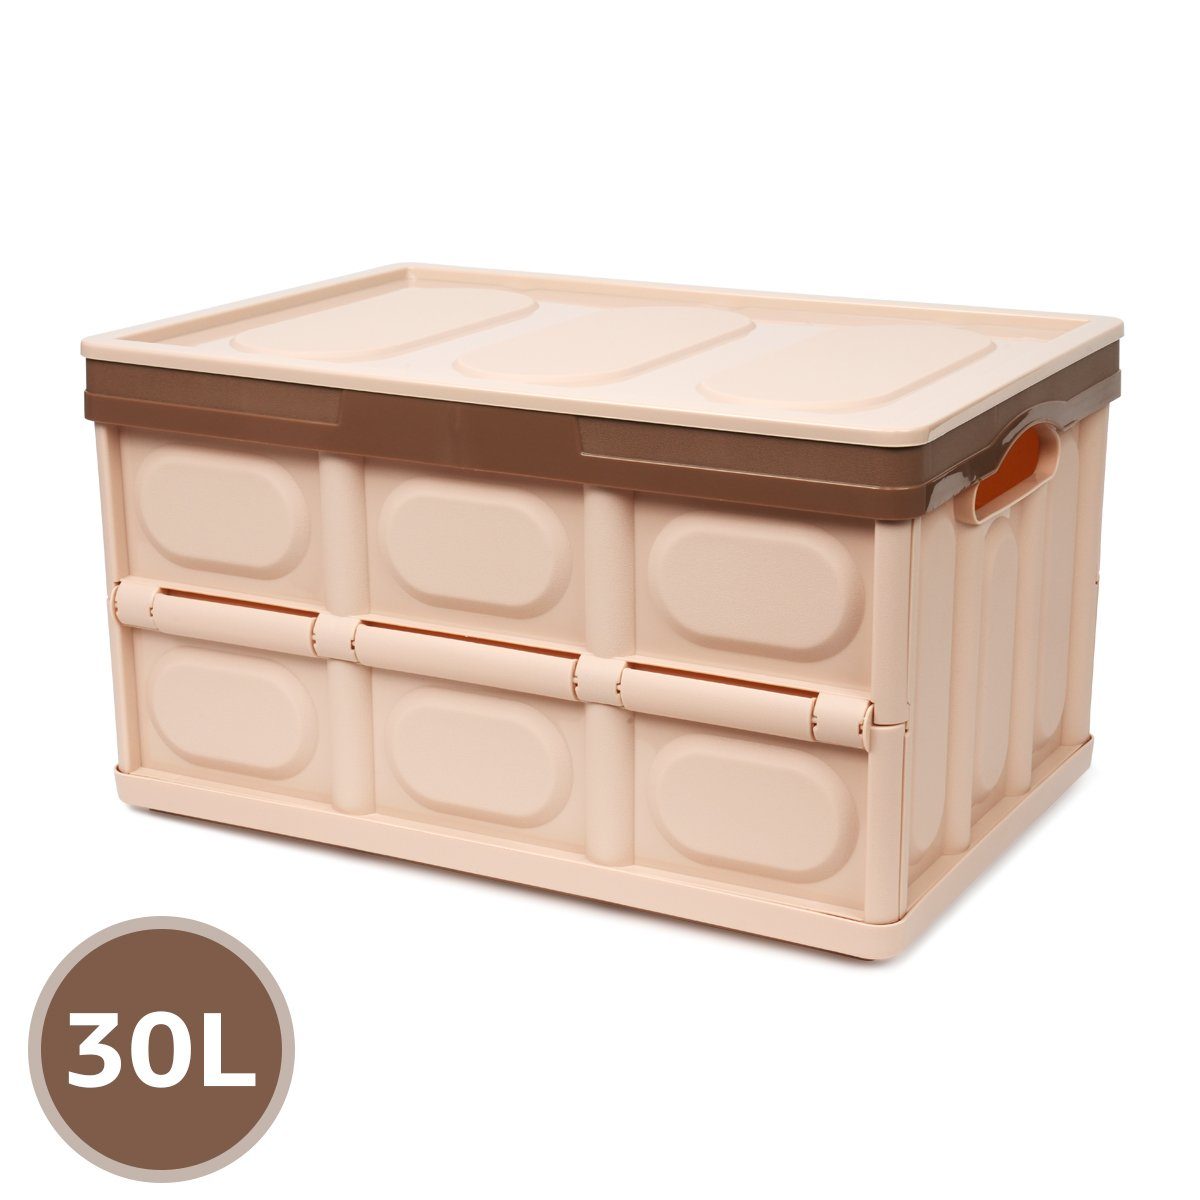 https://i.otto.de/i/otto/ce2f5dd4-3ac8-51bf-b992-8c62829a66c9/mulisoft-stapelbox-klappbox-stapelbar-transportbox-faltbare-container-storage-box-1-st-30l-55l-faltbare-lagerbehaelter-fuer-kleidung-spielzeug-buecher.jpg?$formatz$